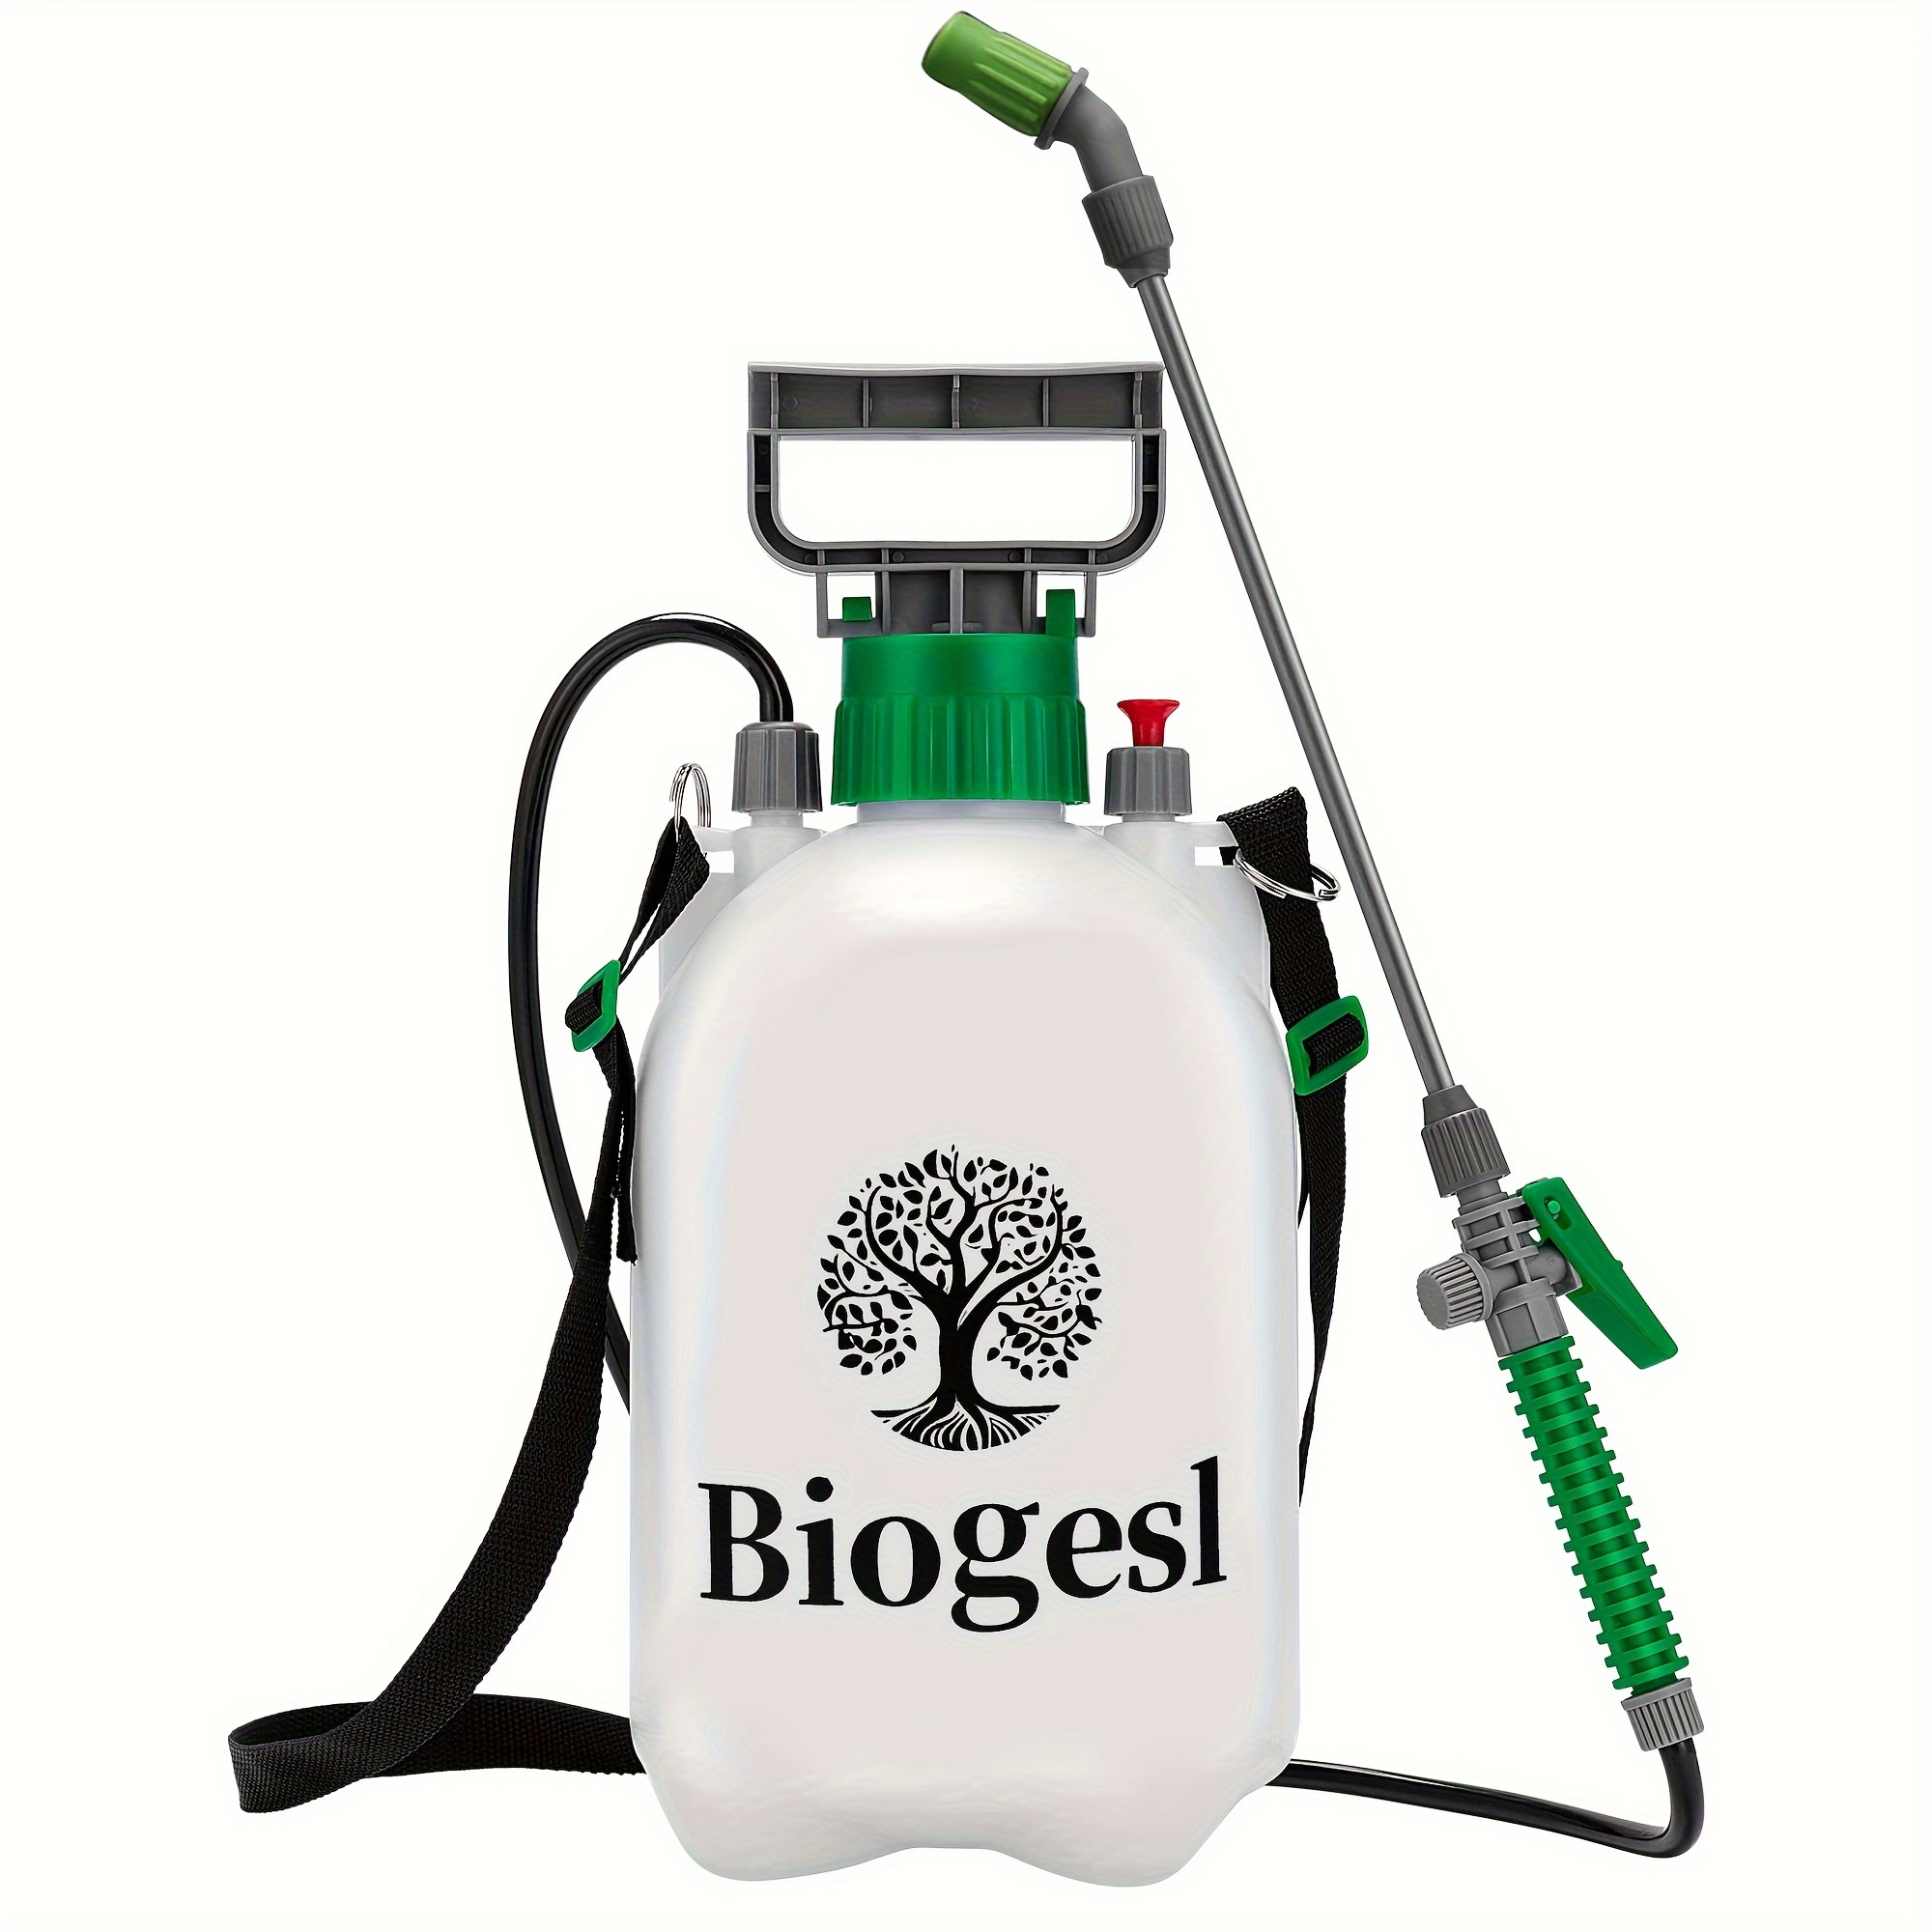 

1 Set Garden Water Sprayer - 1.3 Gallon Pump Pressure Bottle With 3 Nozzles, Adjustable Shoulder Strap & Pressure Valve - Perfect For Plants & Cleaning!